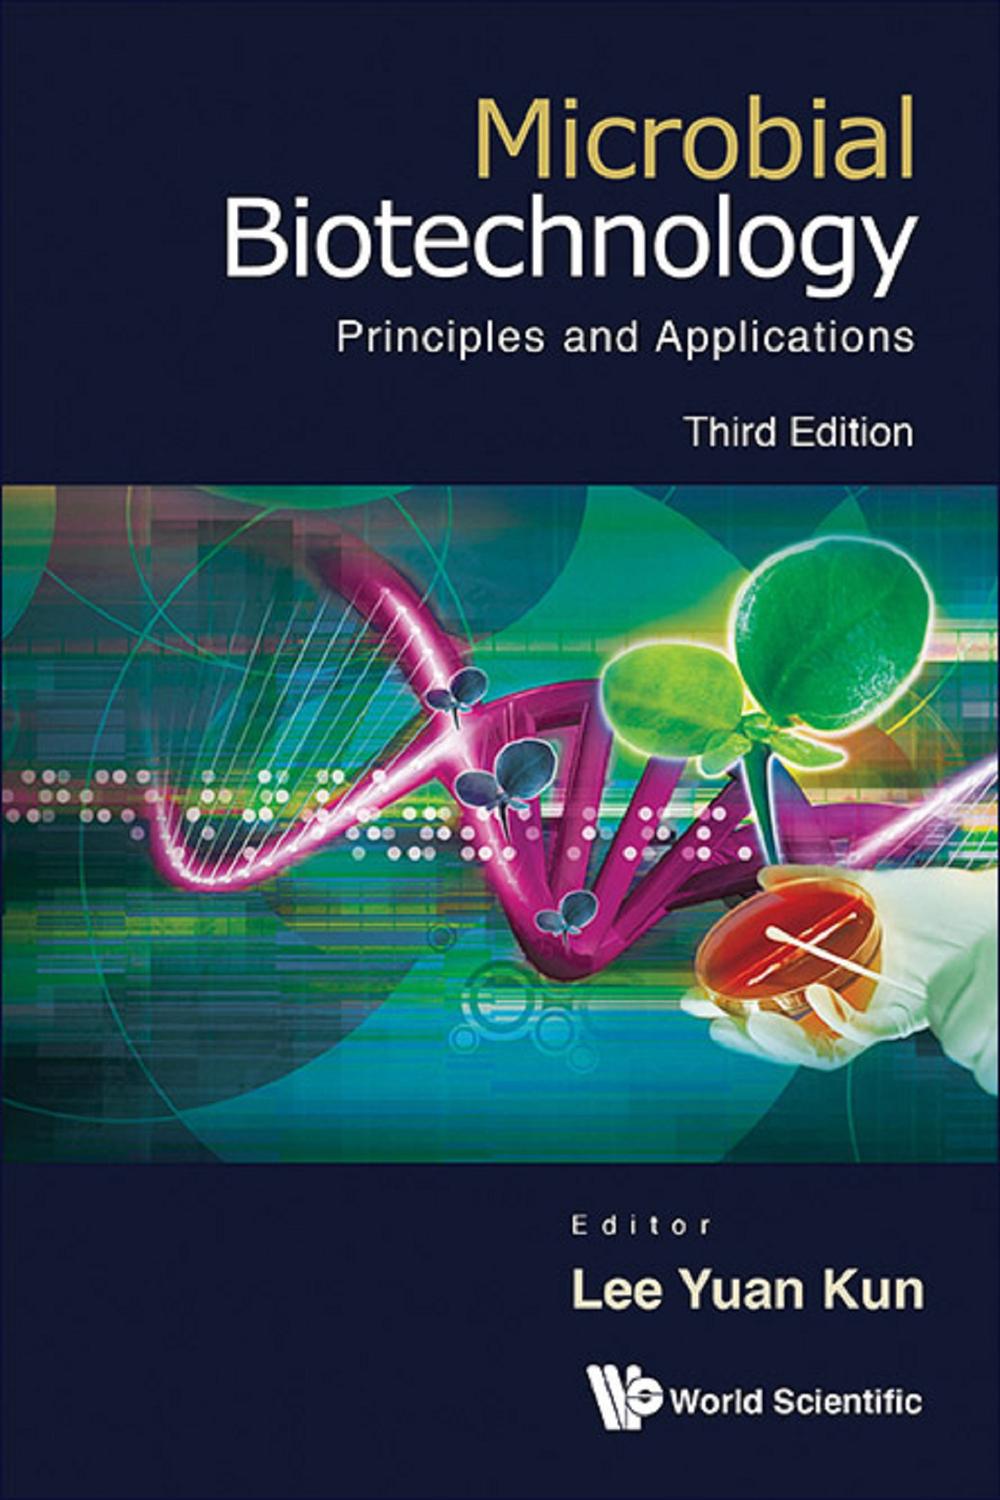 [PDF] Microbial Biotechnology by Yuan Kun Lee Perlego